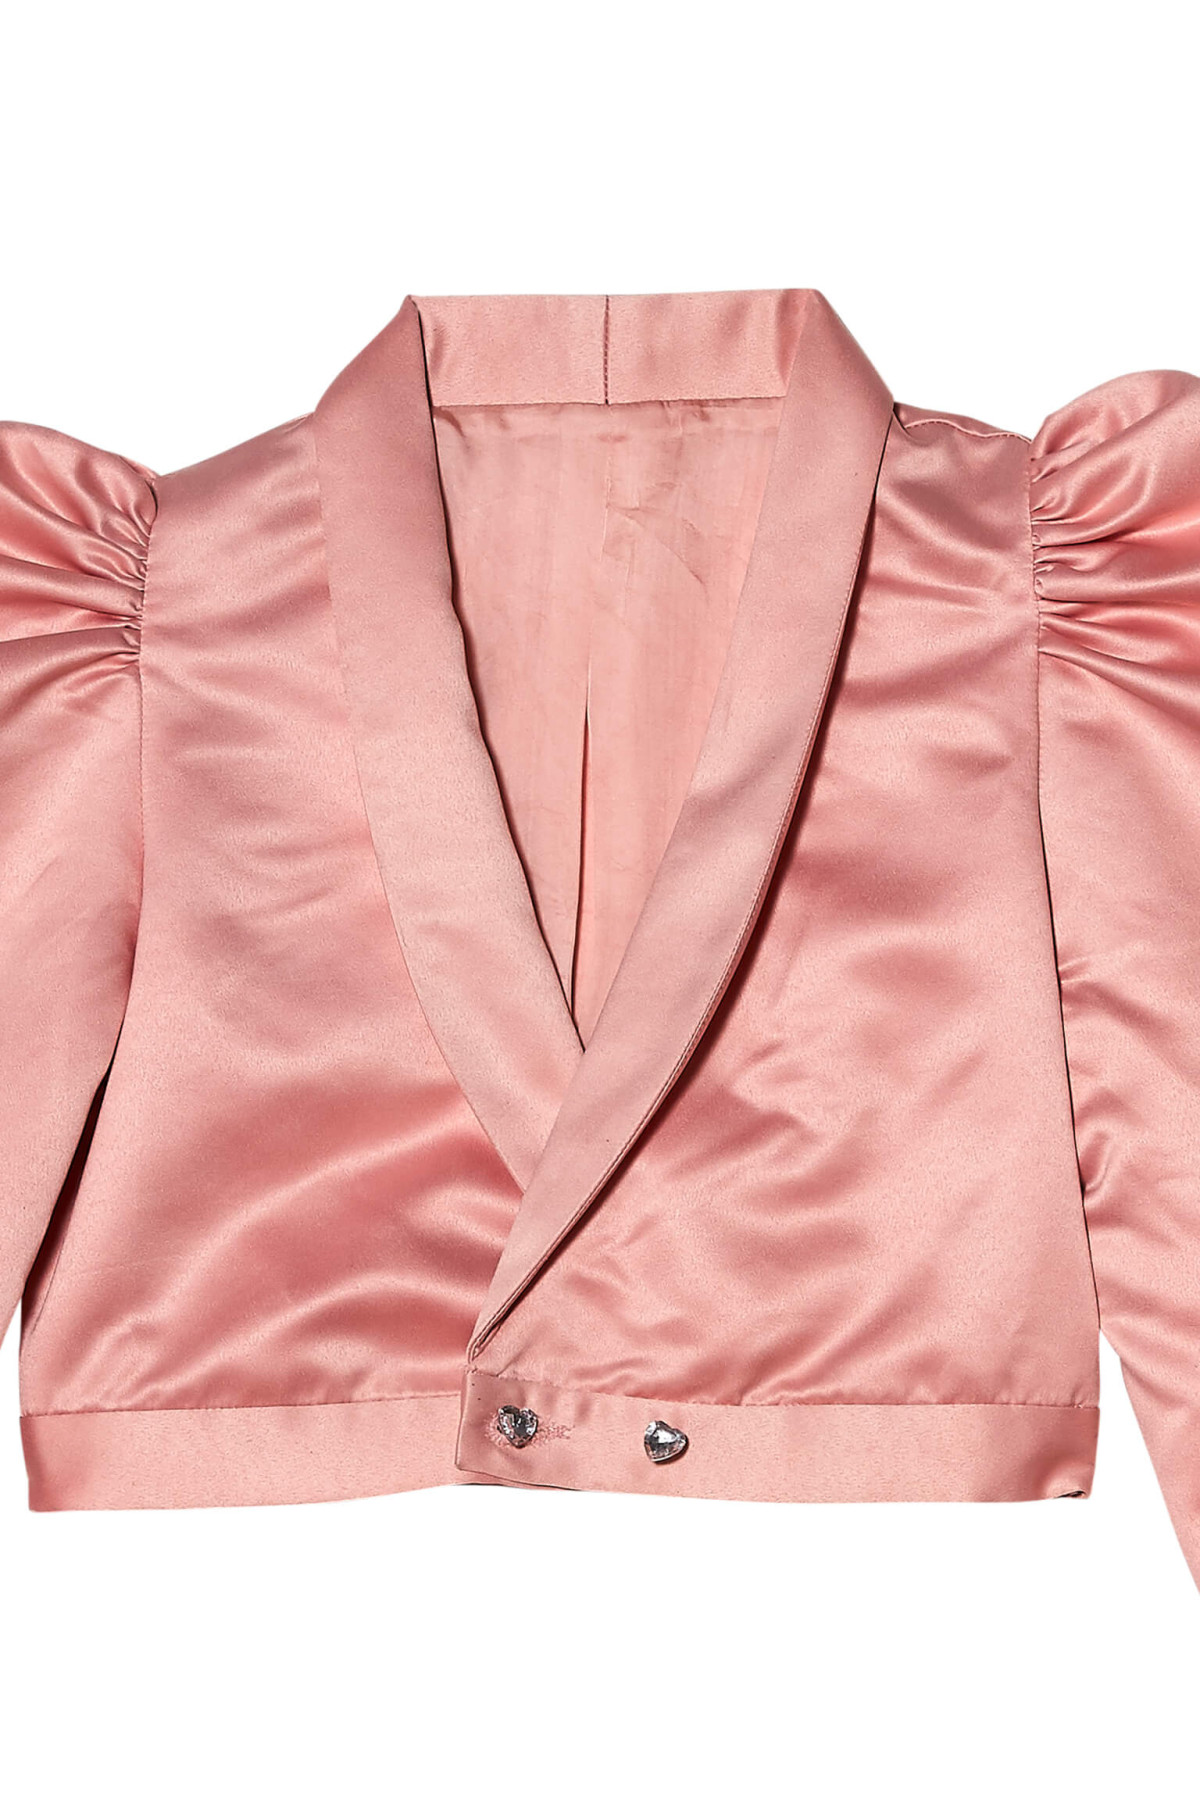 Rent Tutu du Monde Her Grace Jacket in Pink Chablis